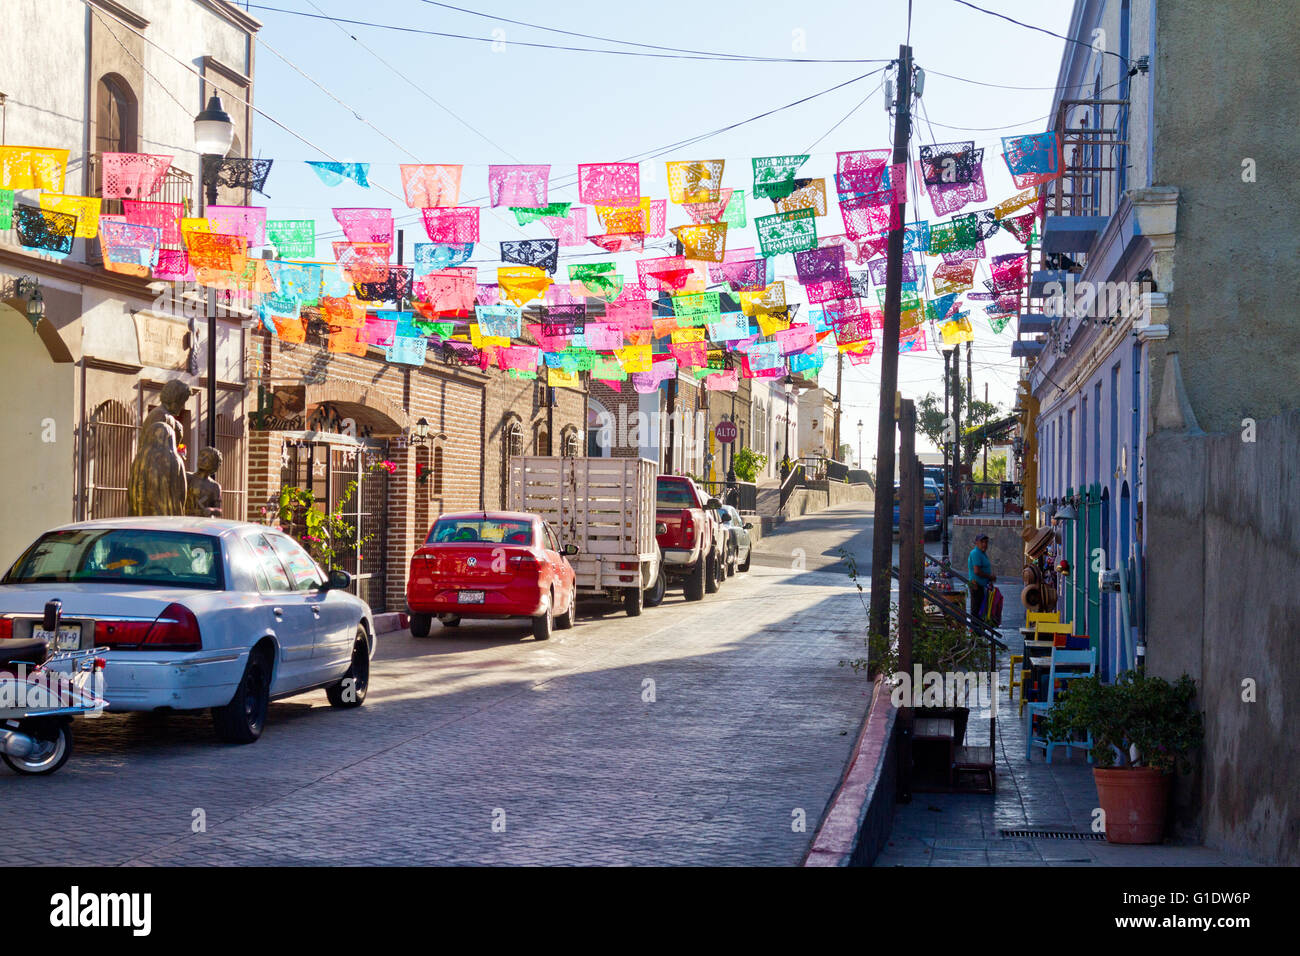 Papel picados (paper flags) decorate a street in Todos Santos, Baja, Mexico. Stock Photo